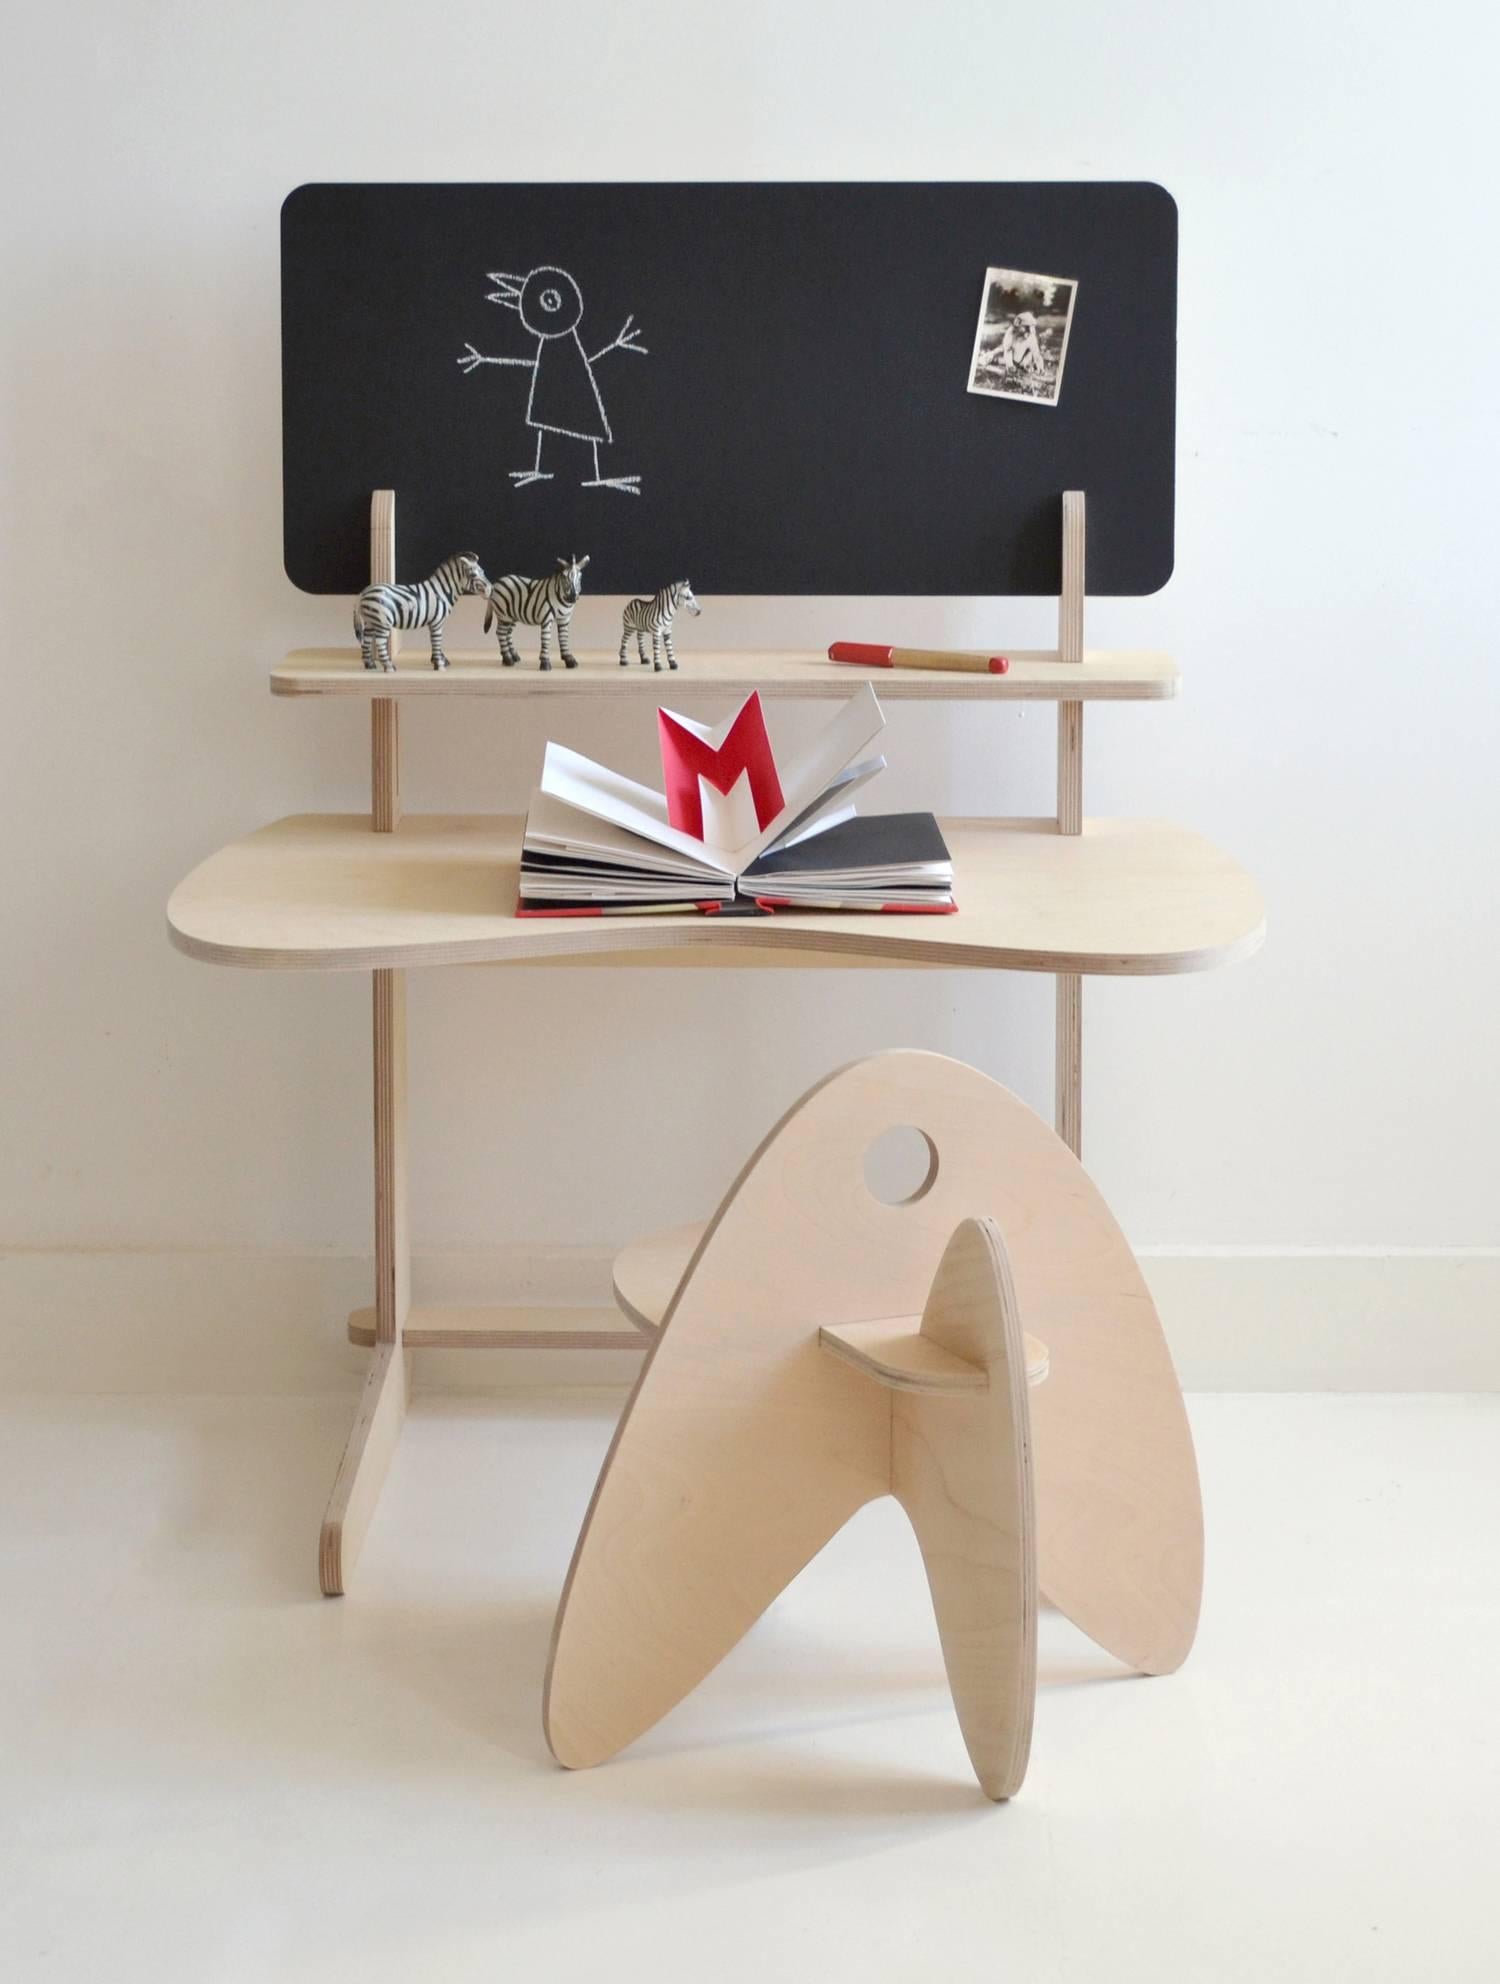 Biwo adjustable desk with blackboard by Makémaké, Contemporary, France, 2017

Designed by Makémaké
France, 2017
Finnish birch plywood, hard-coat organic oil finish
flat-pack, self-assembly
Measure: H 36.25 in, W 28.75 in, D 18.5 in
Desk H